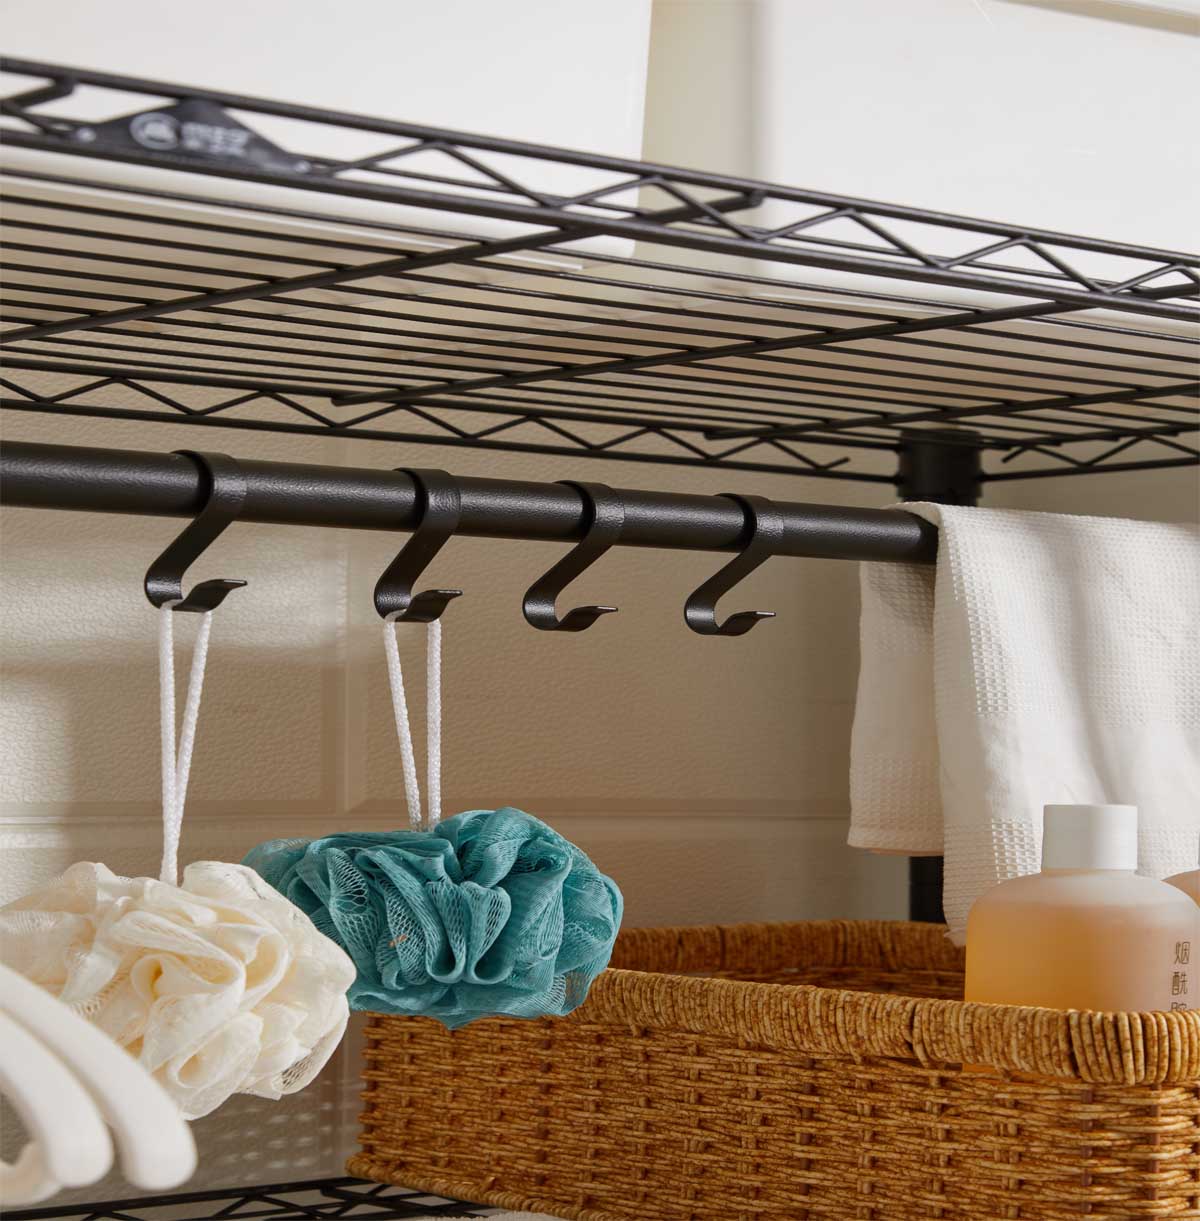 2-Tier Washing Machine Storage Rack with Hanging Rod, Hooks and baskets / Laundry Room Shelf Over The Washing Machine 